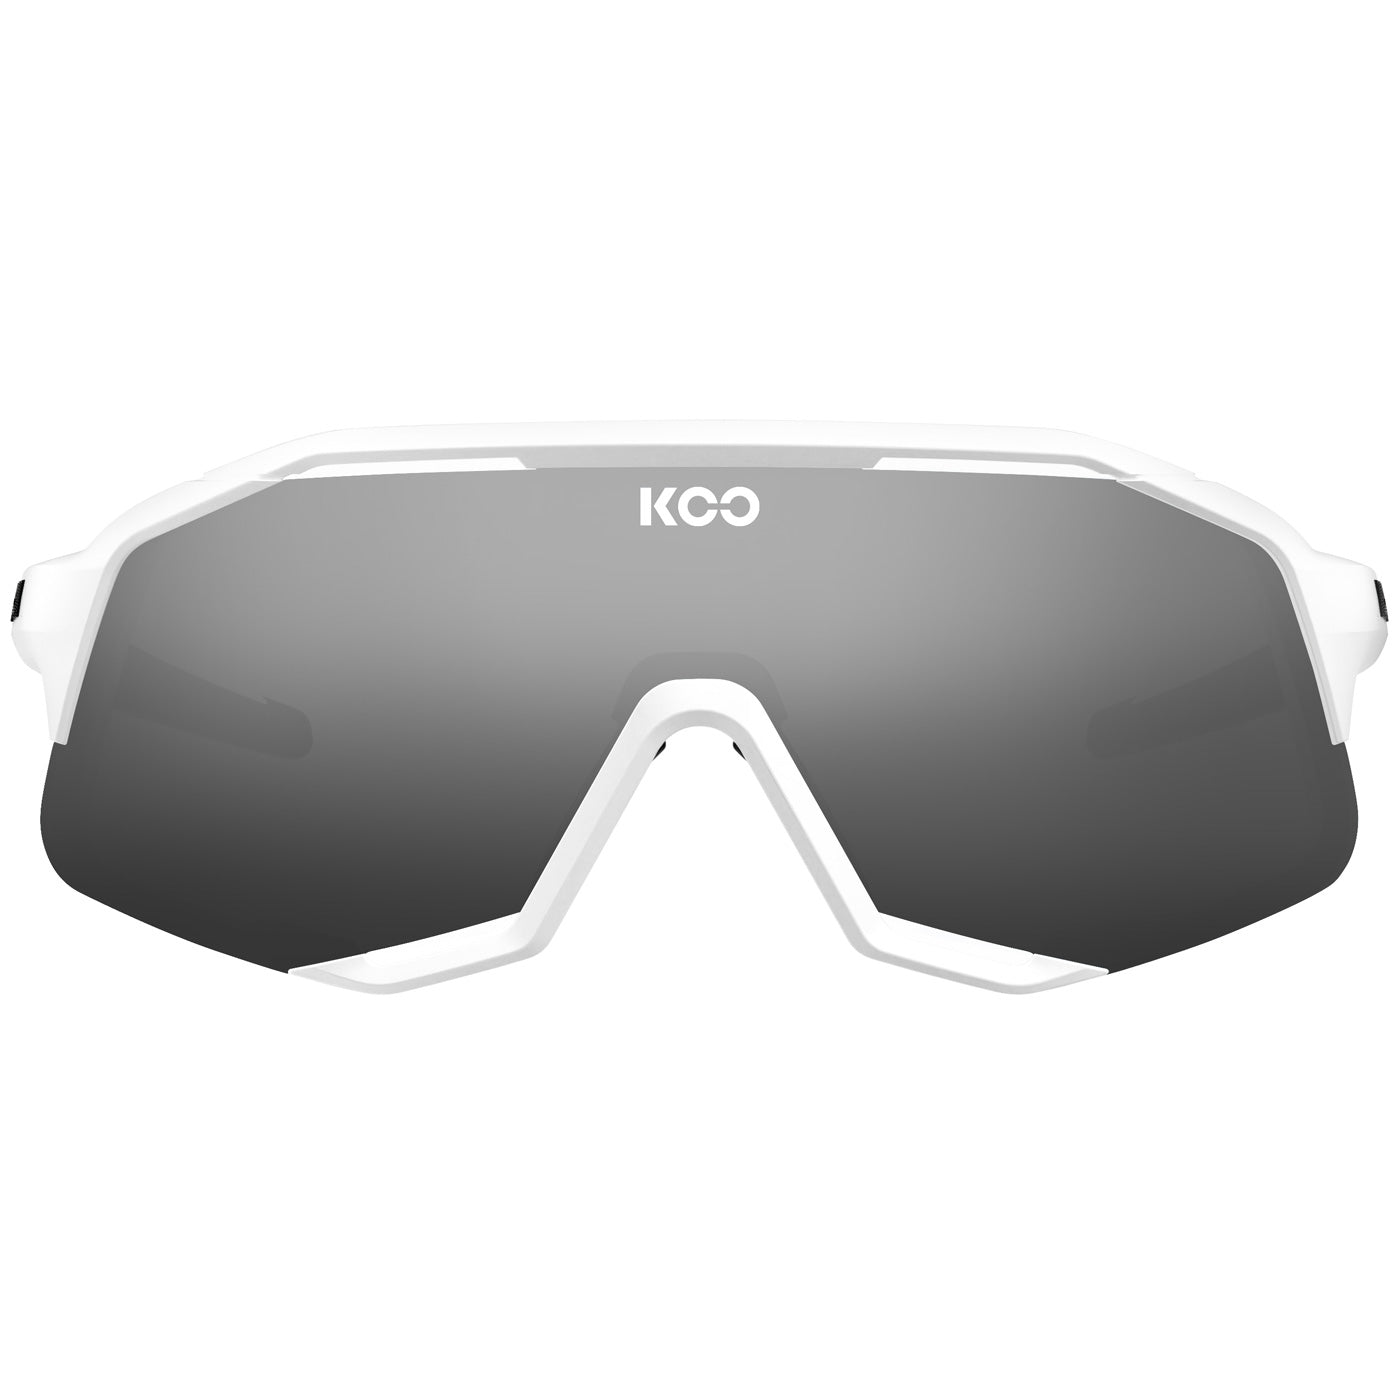 KOO Demos glasses - Maratona Dles Dolomites